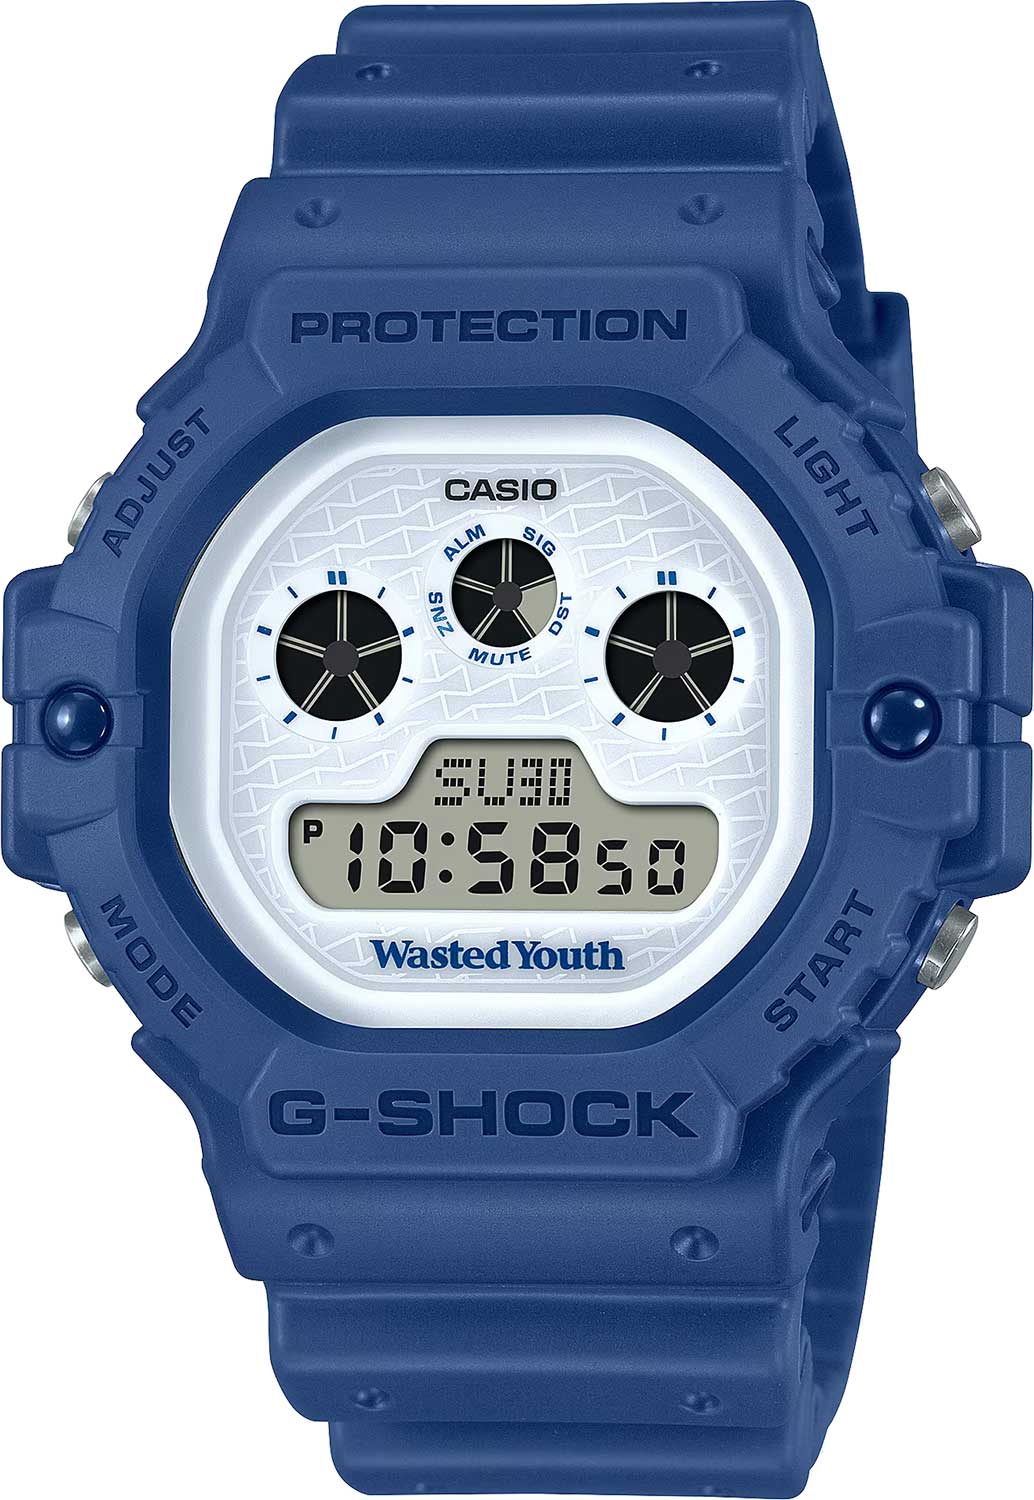    Casio G-SHOCK DW-5900WY-2  